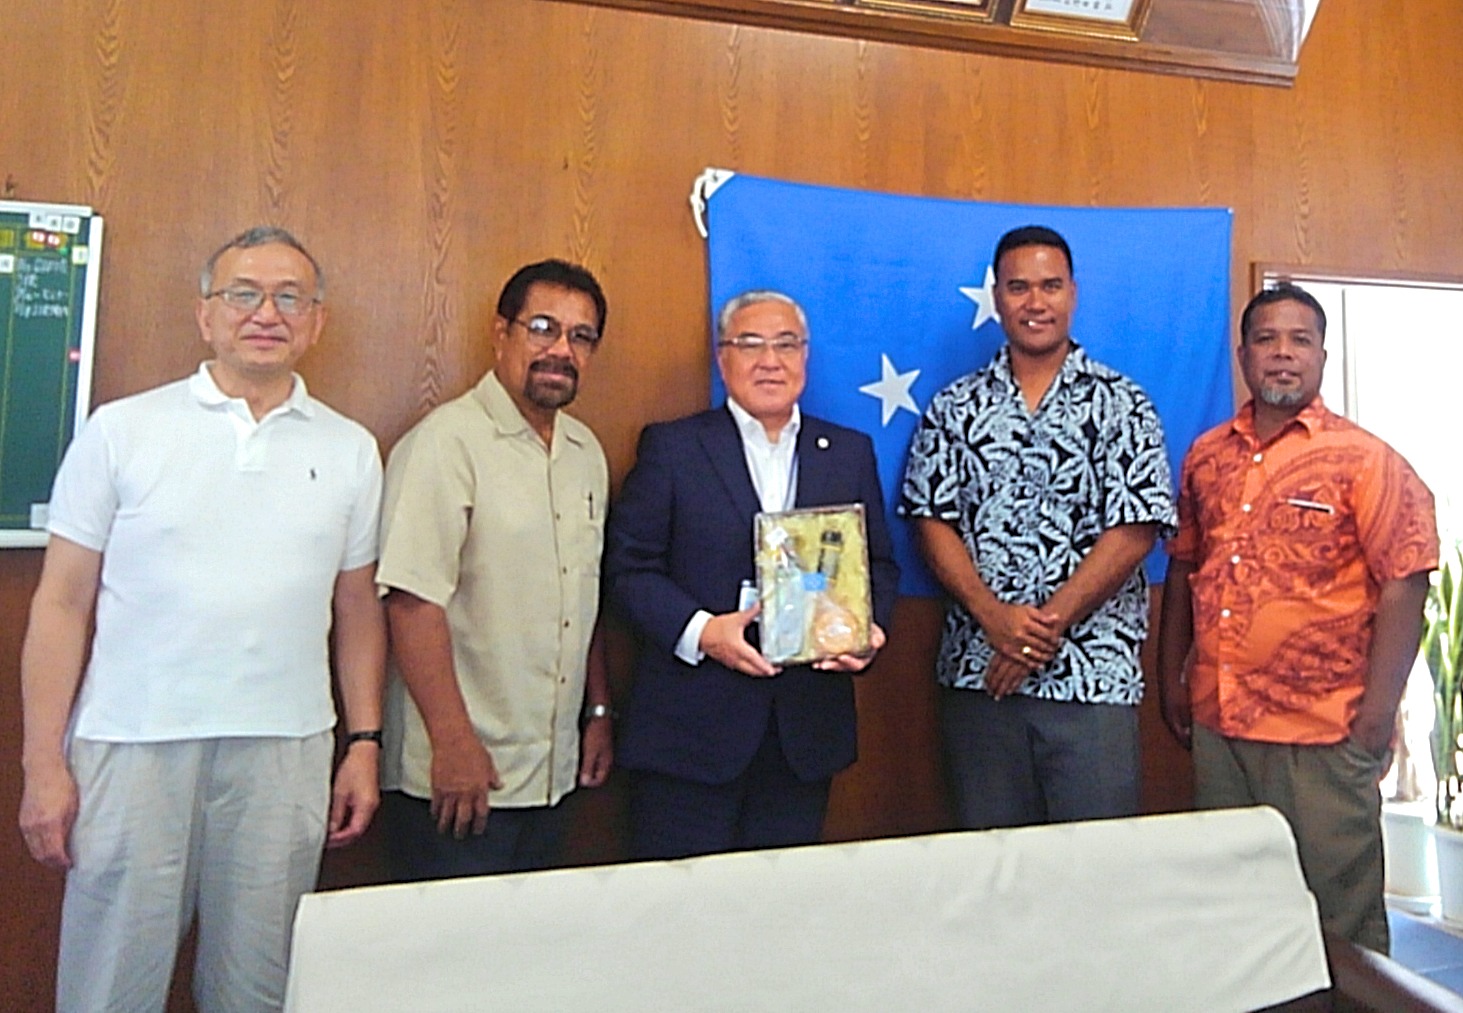 Pacific Leaders Invitation Program: Federated States of Micronesia Chuuk State Young Leader Invitation Program I”